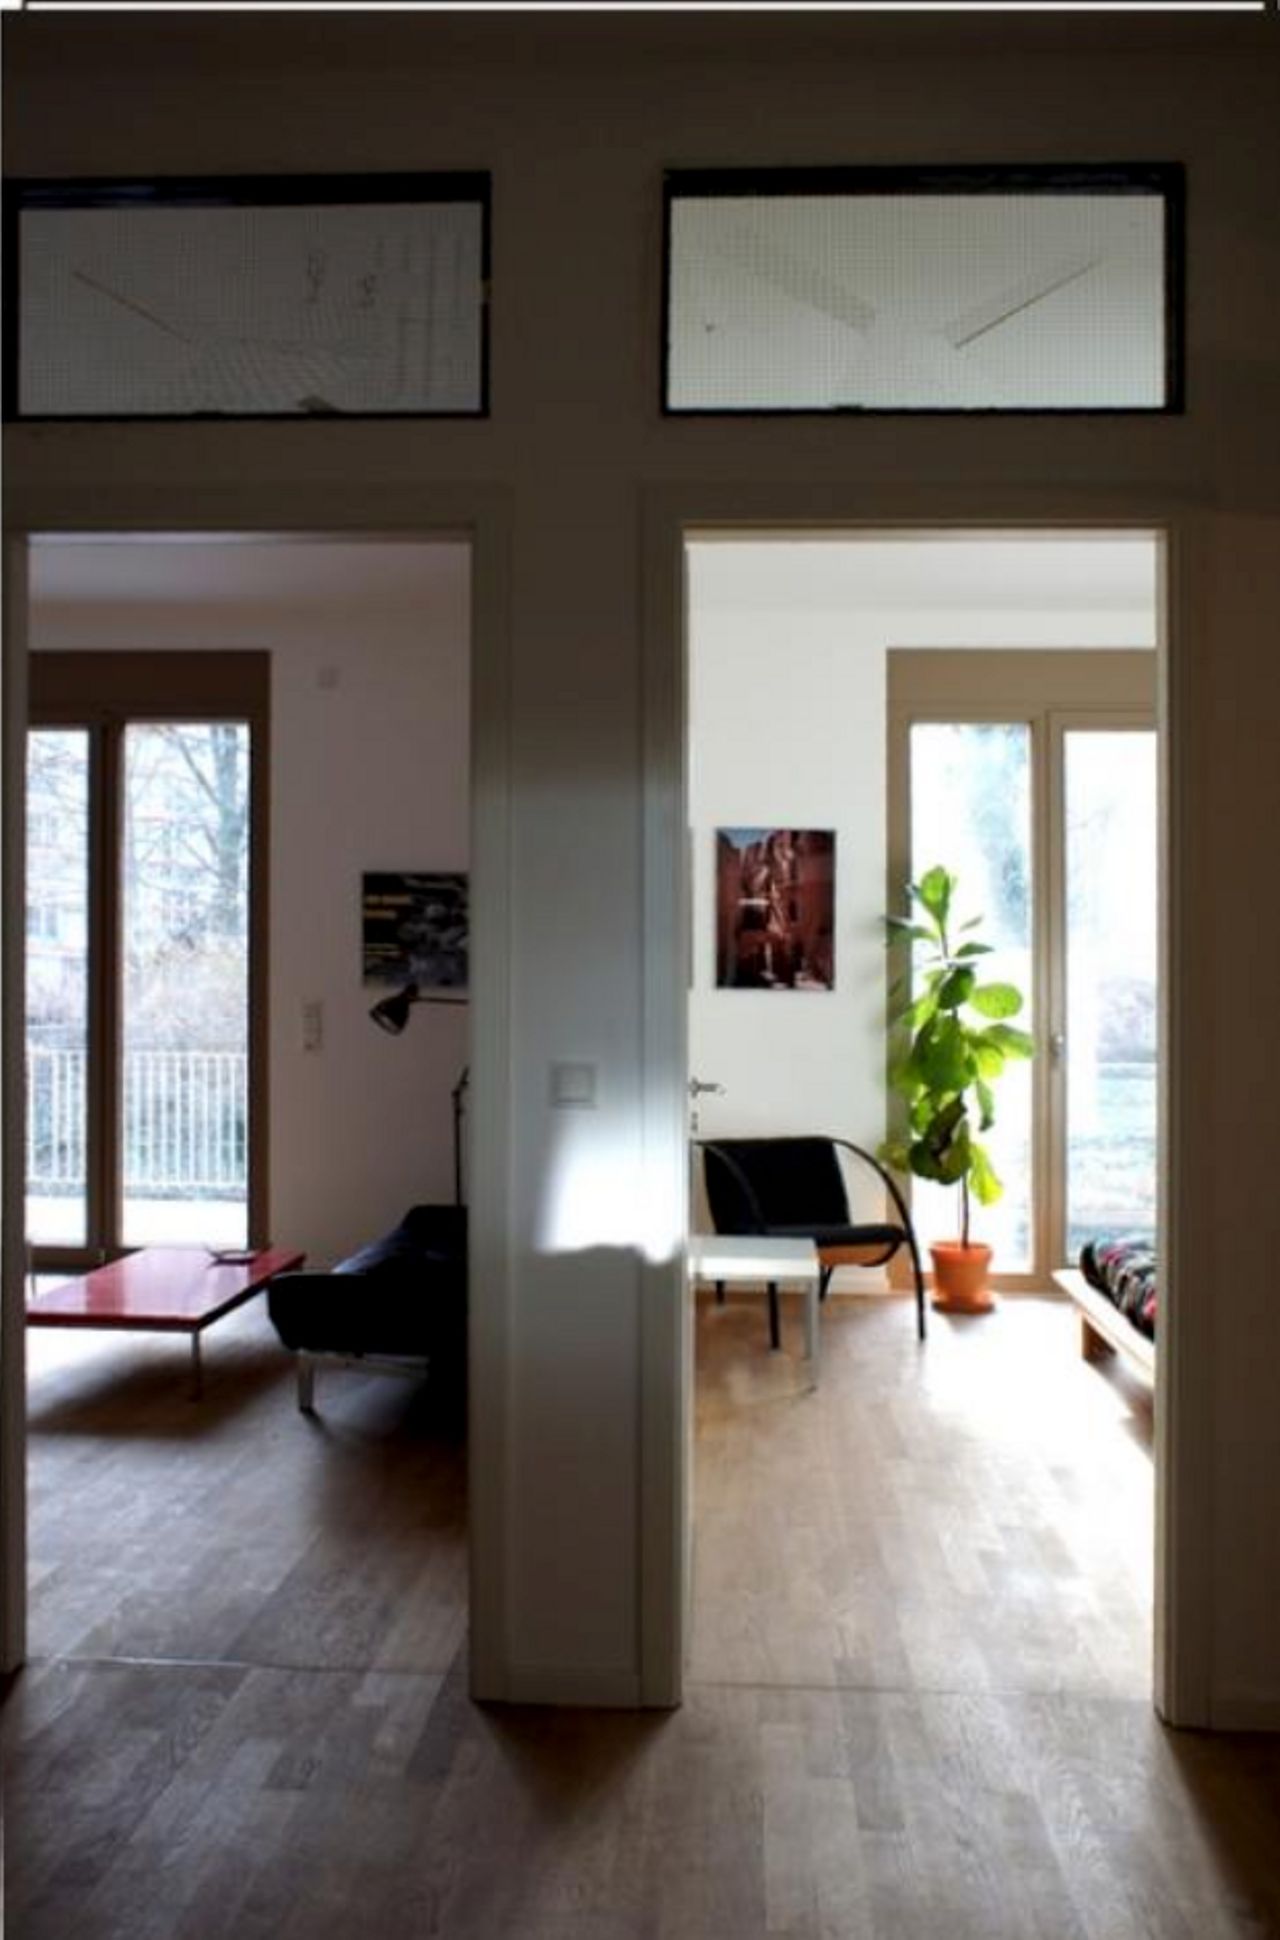 New and pretty suite located in Friedrichshain, Berlin